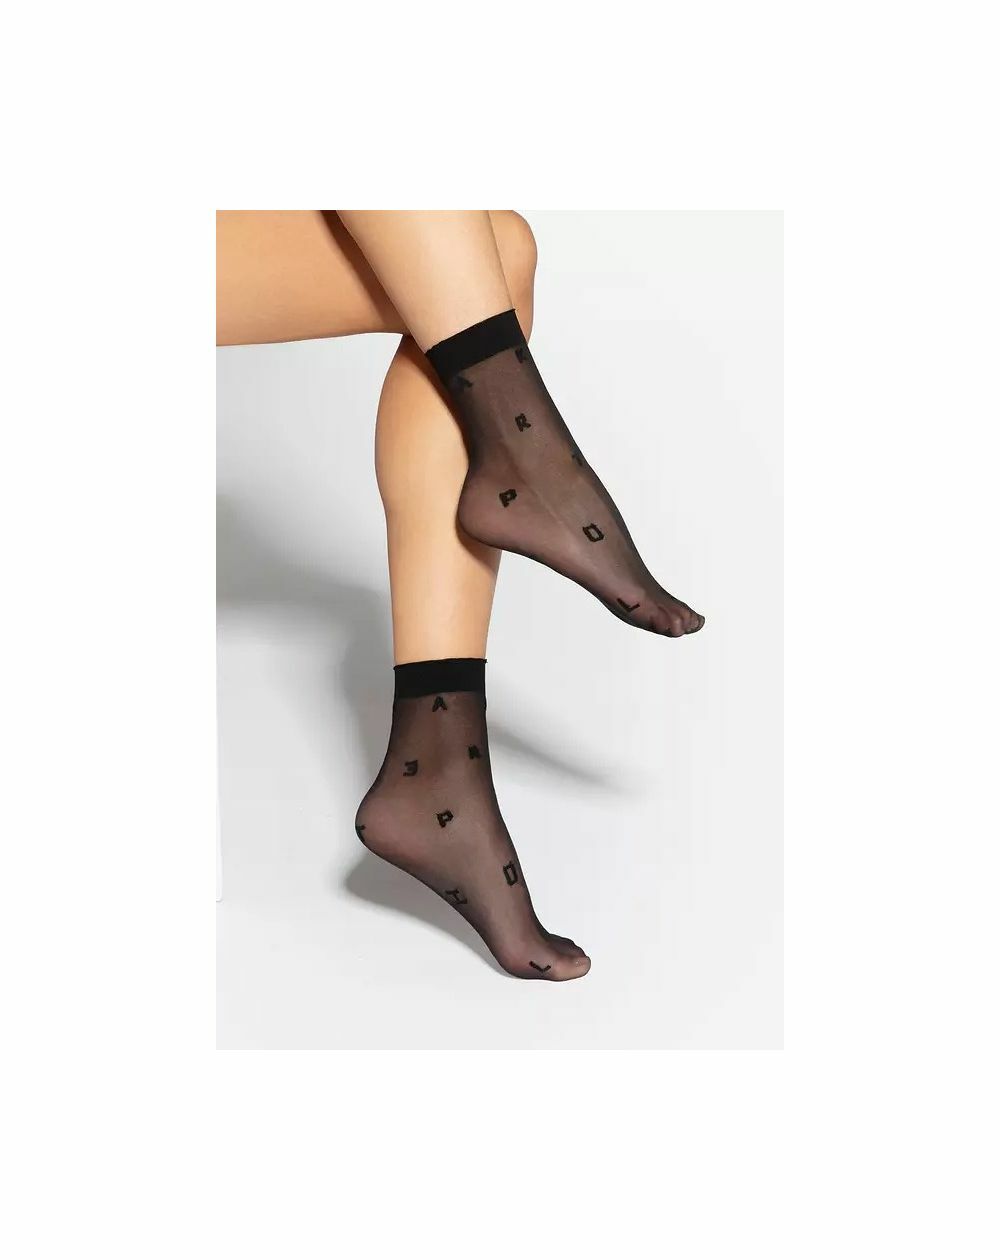 Gatta Trendy socks wz.03 20 den